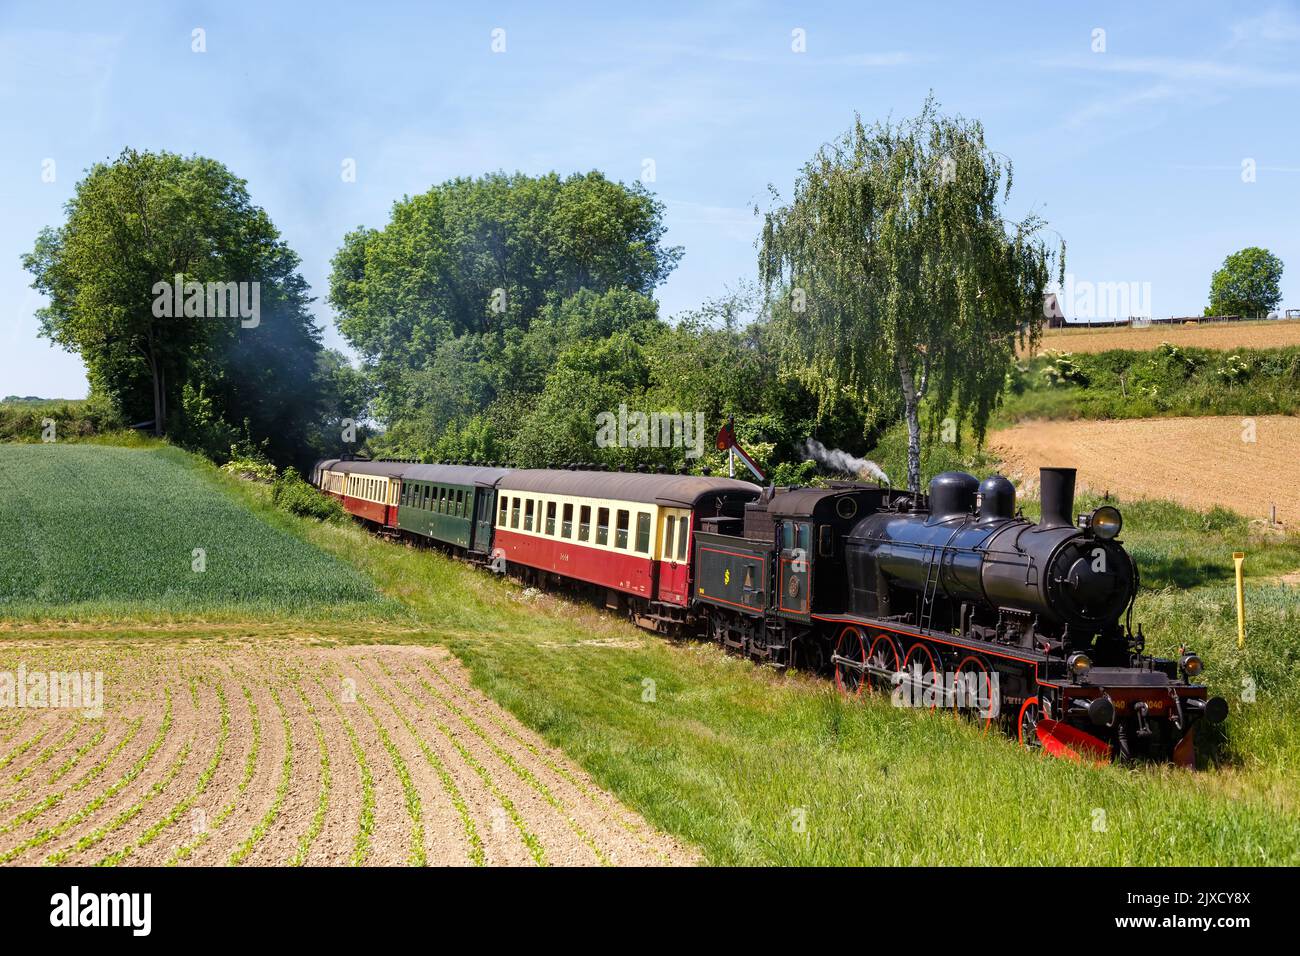 Miljoenenlijn steam train locomotive museum railway rail near Wijlre in the Netherlands Stock Photo